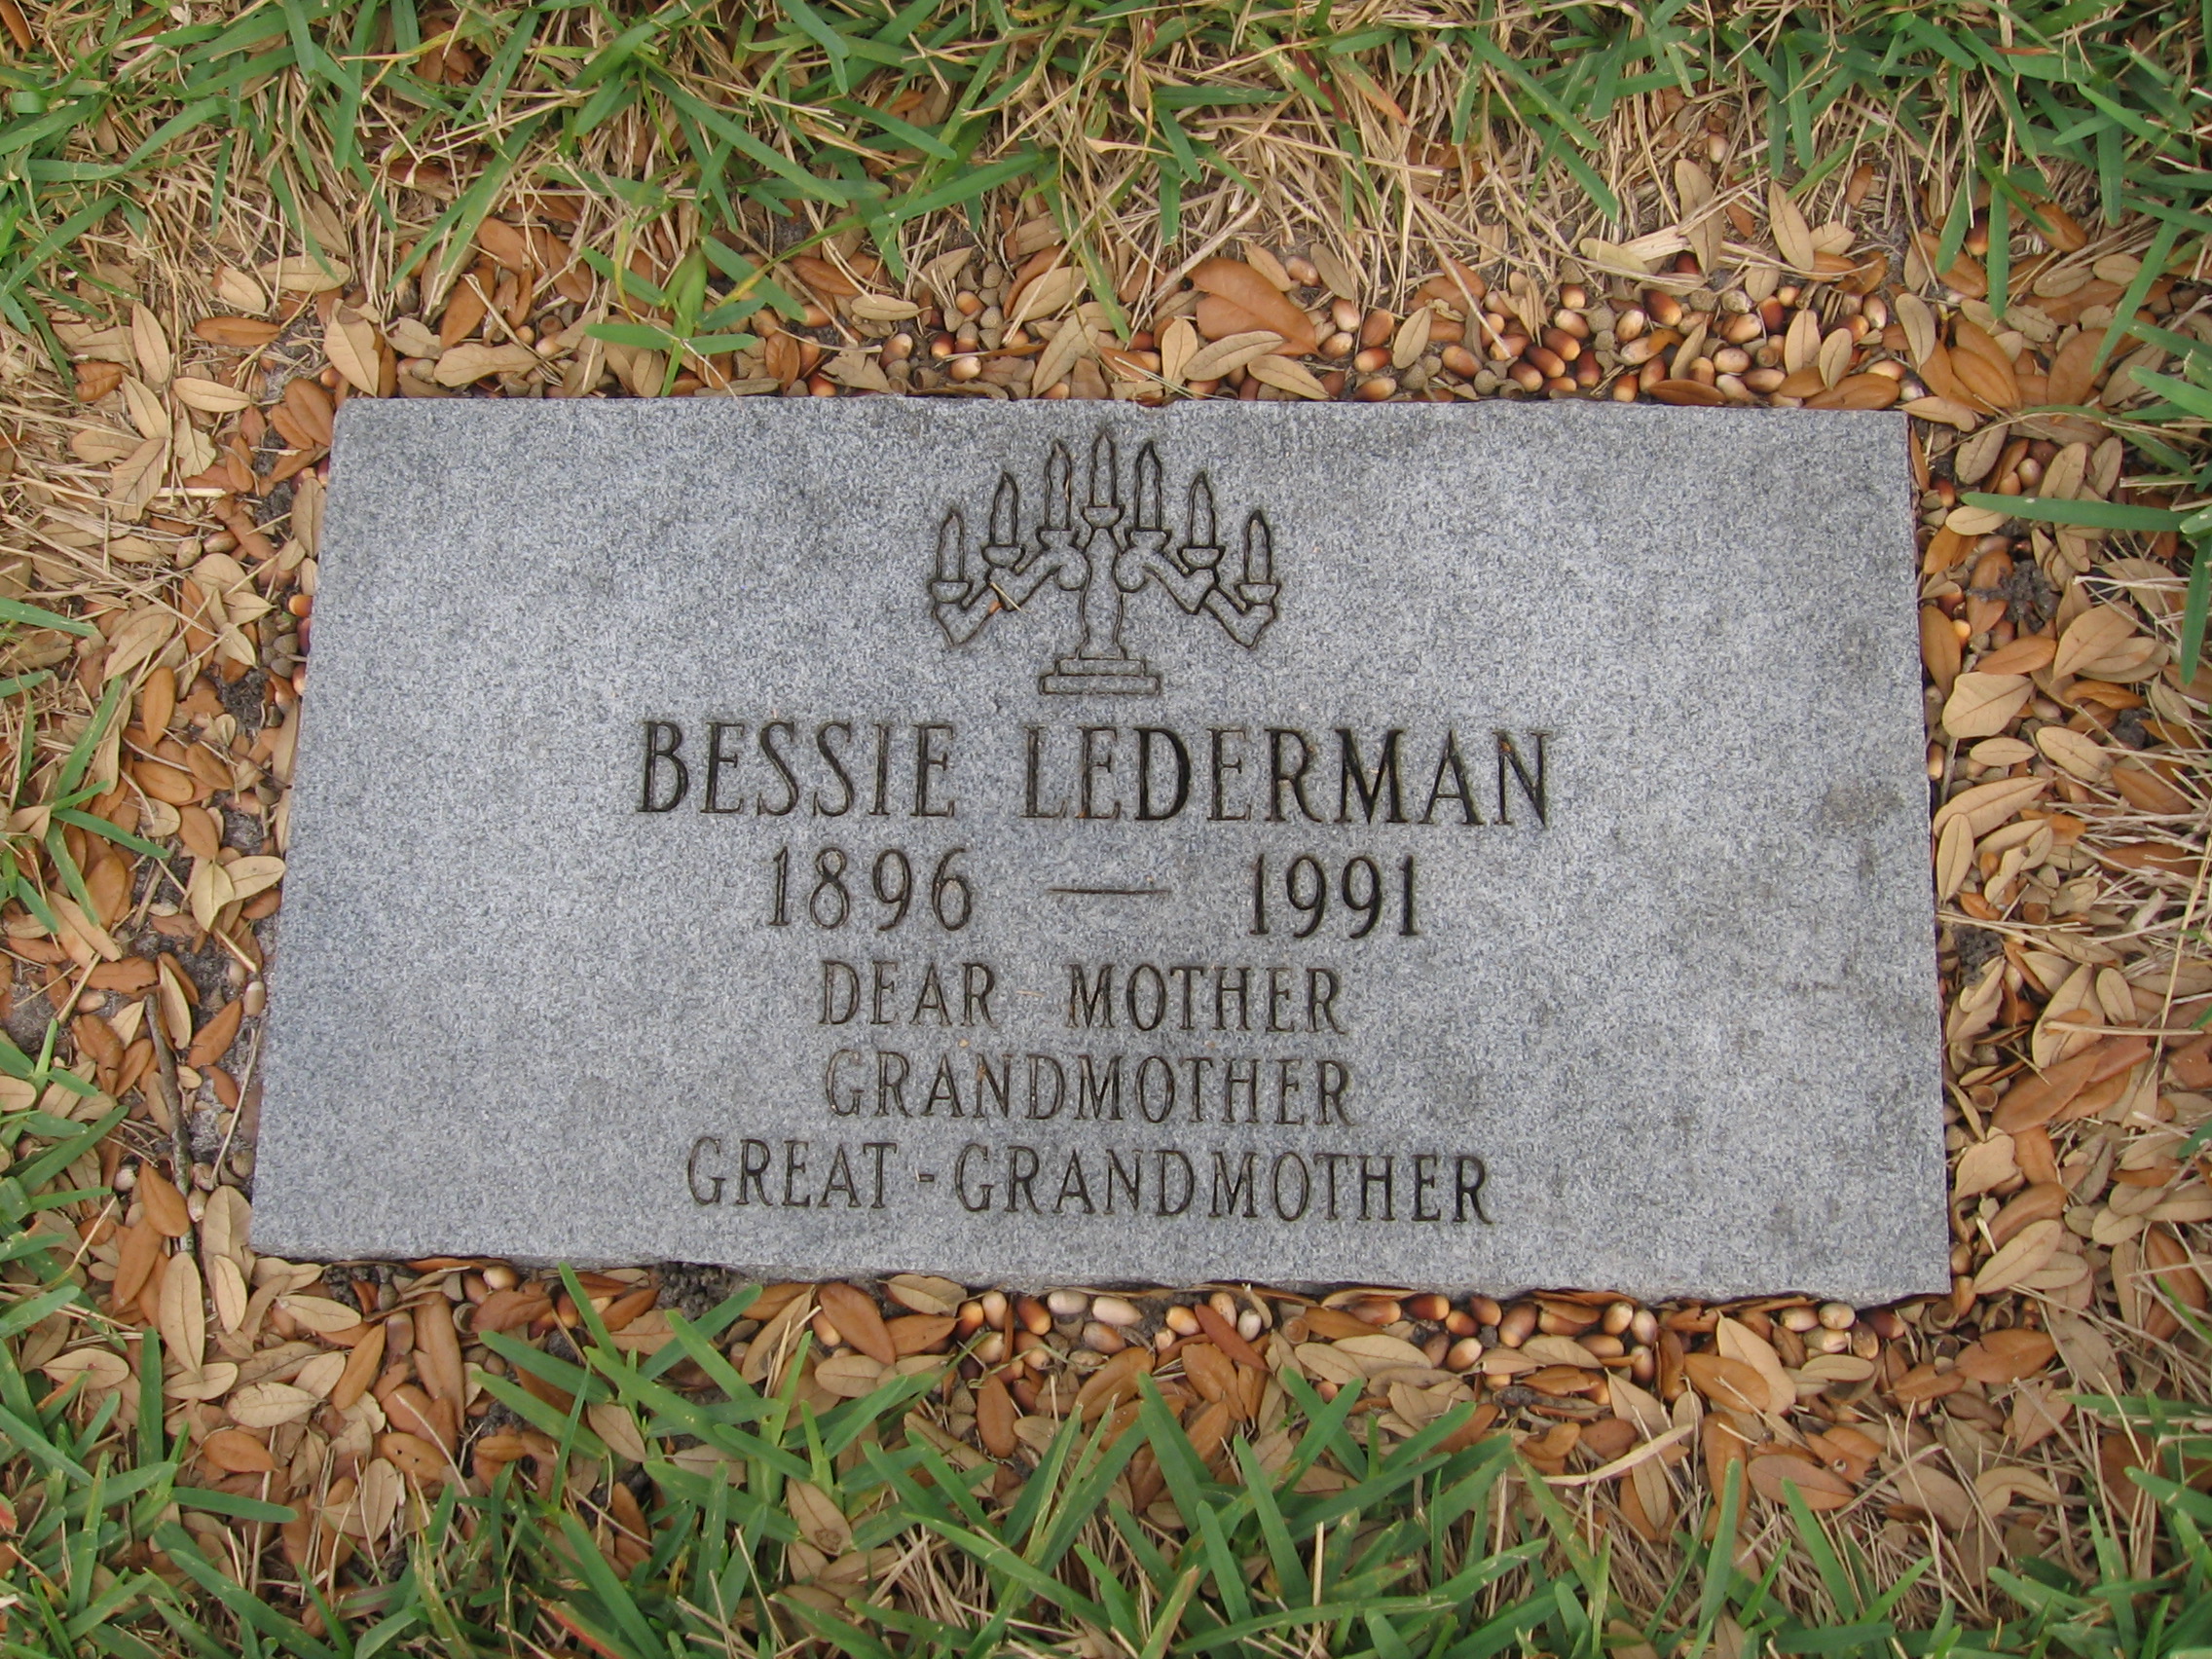 Bessie Lederman